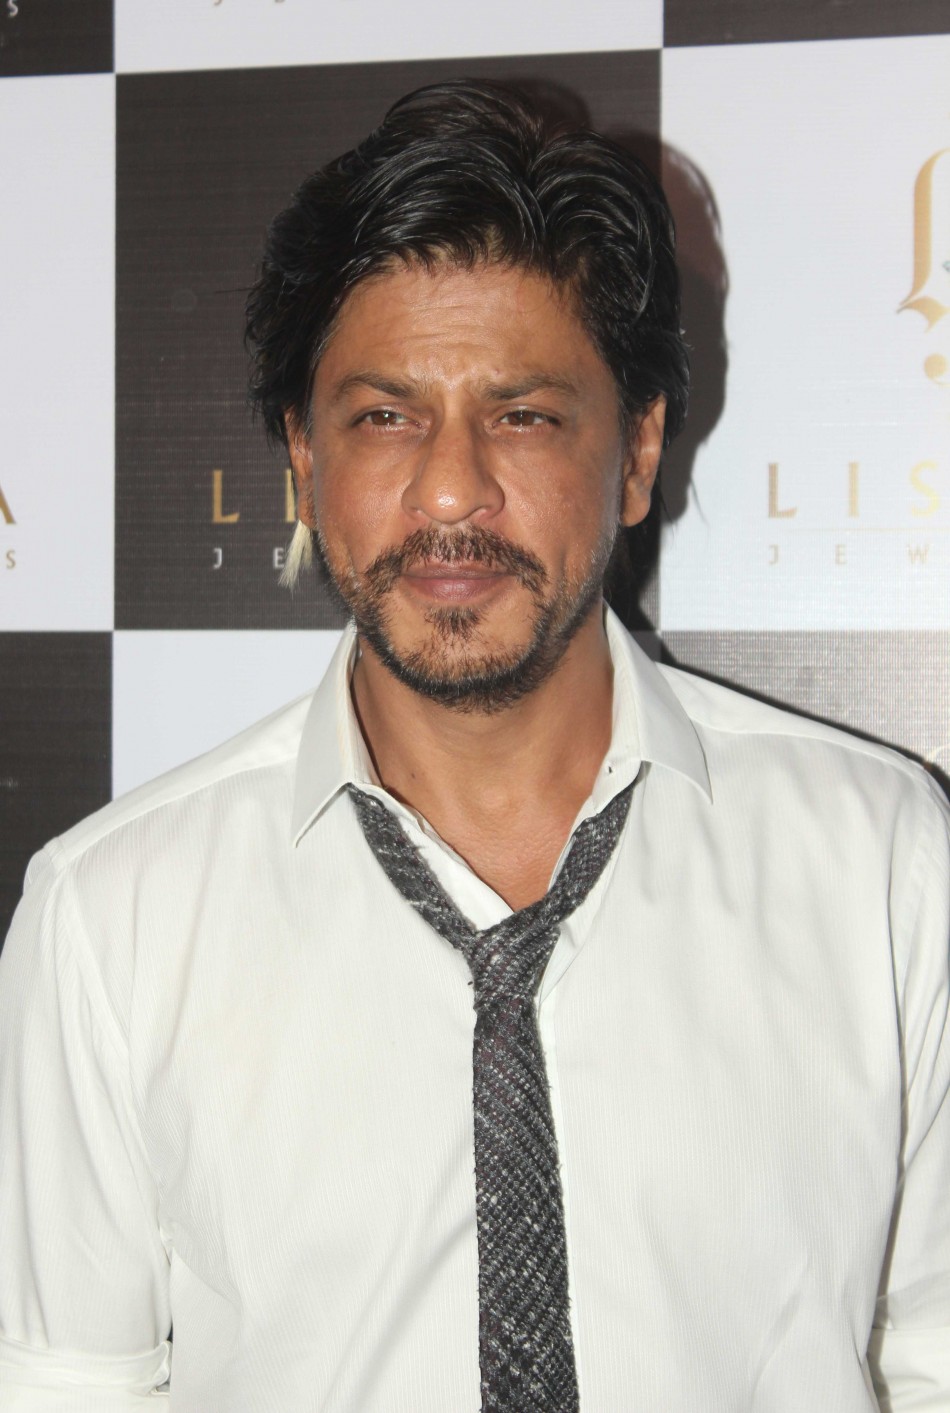 Shah Rukh Khan, sporting